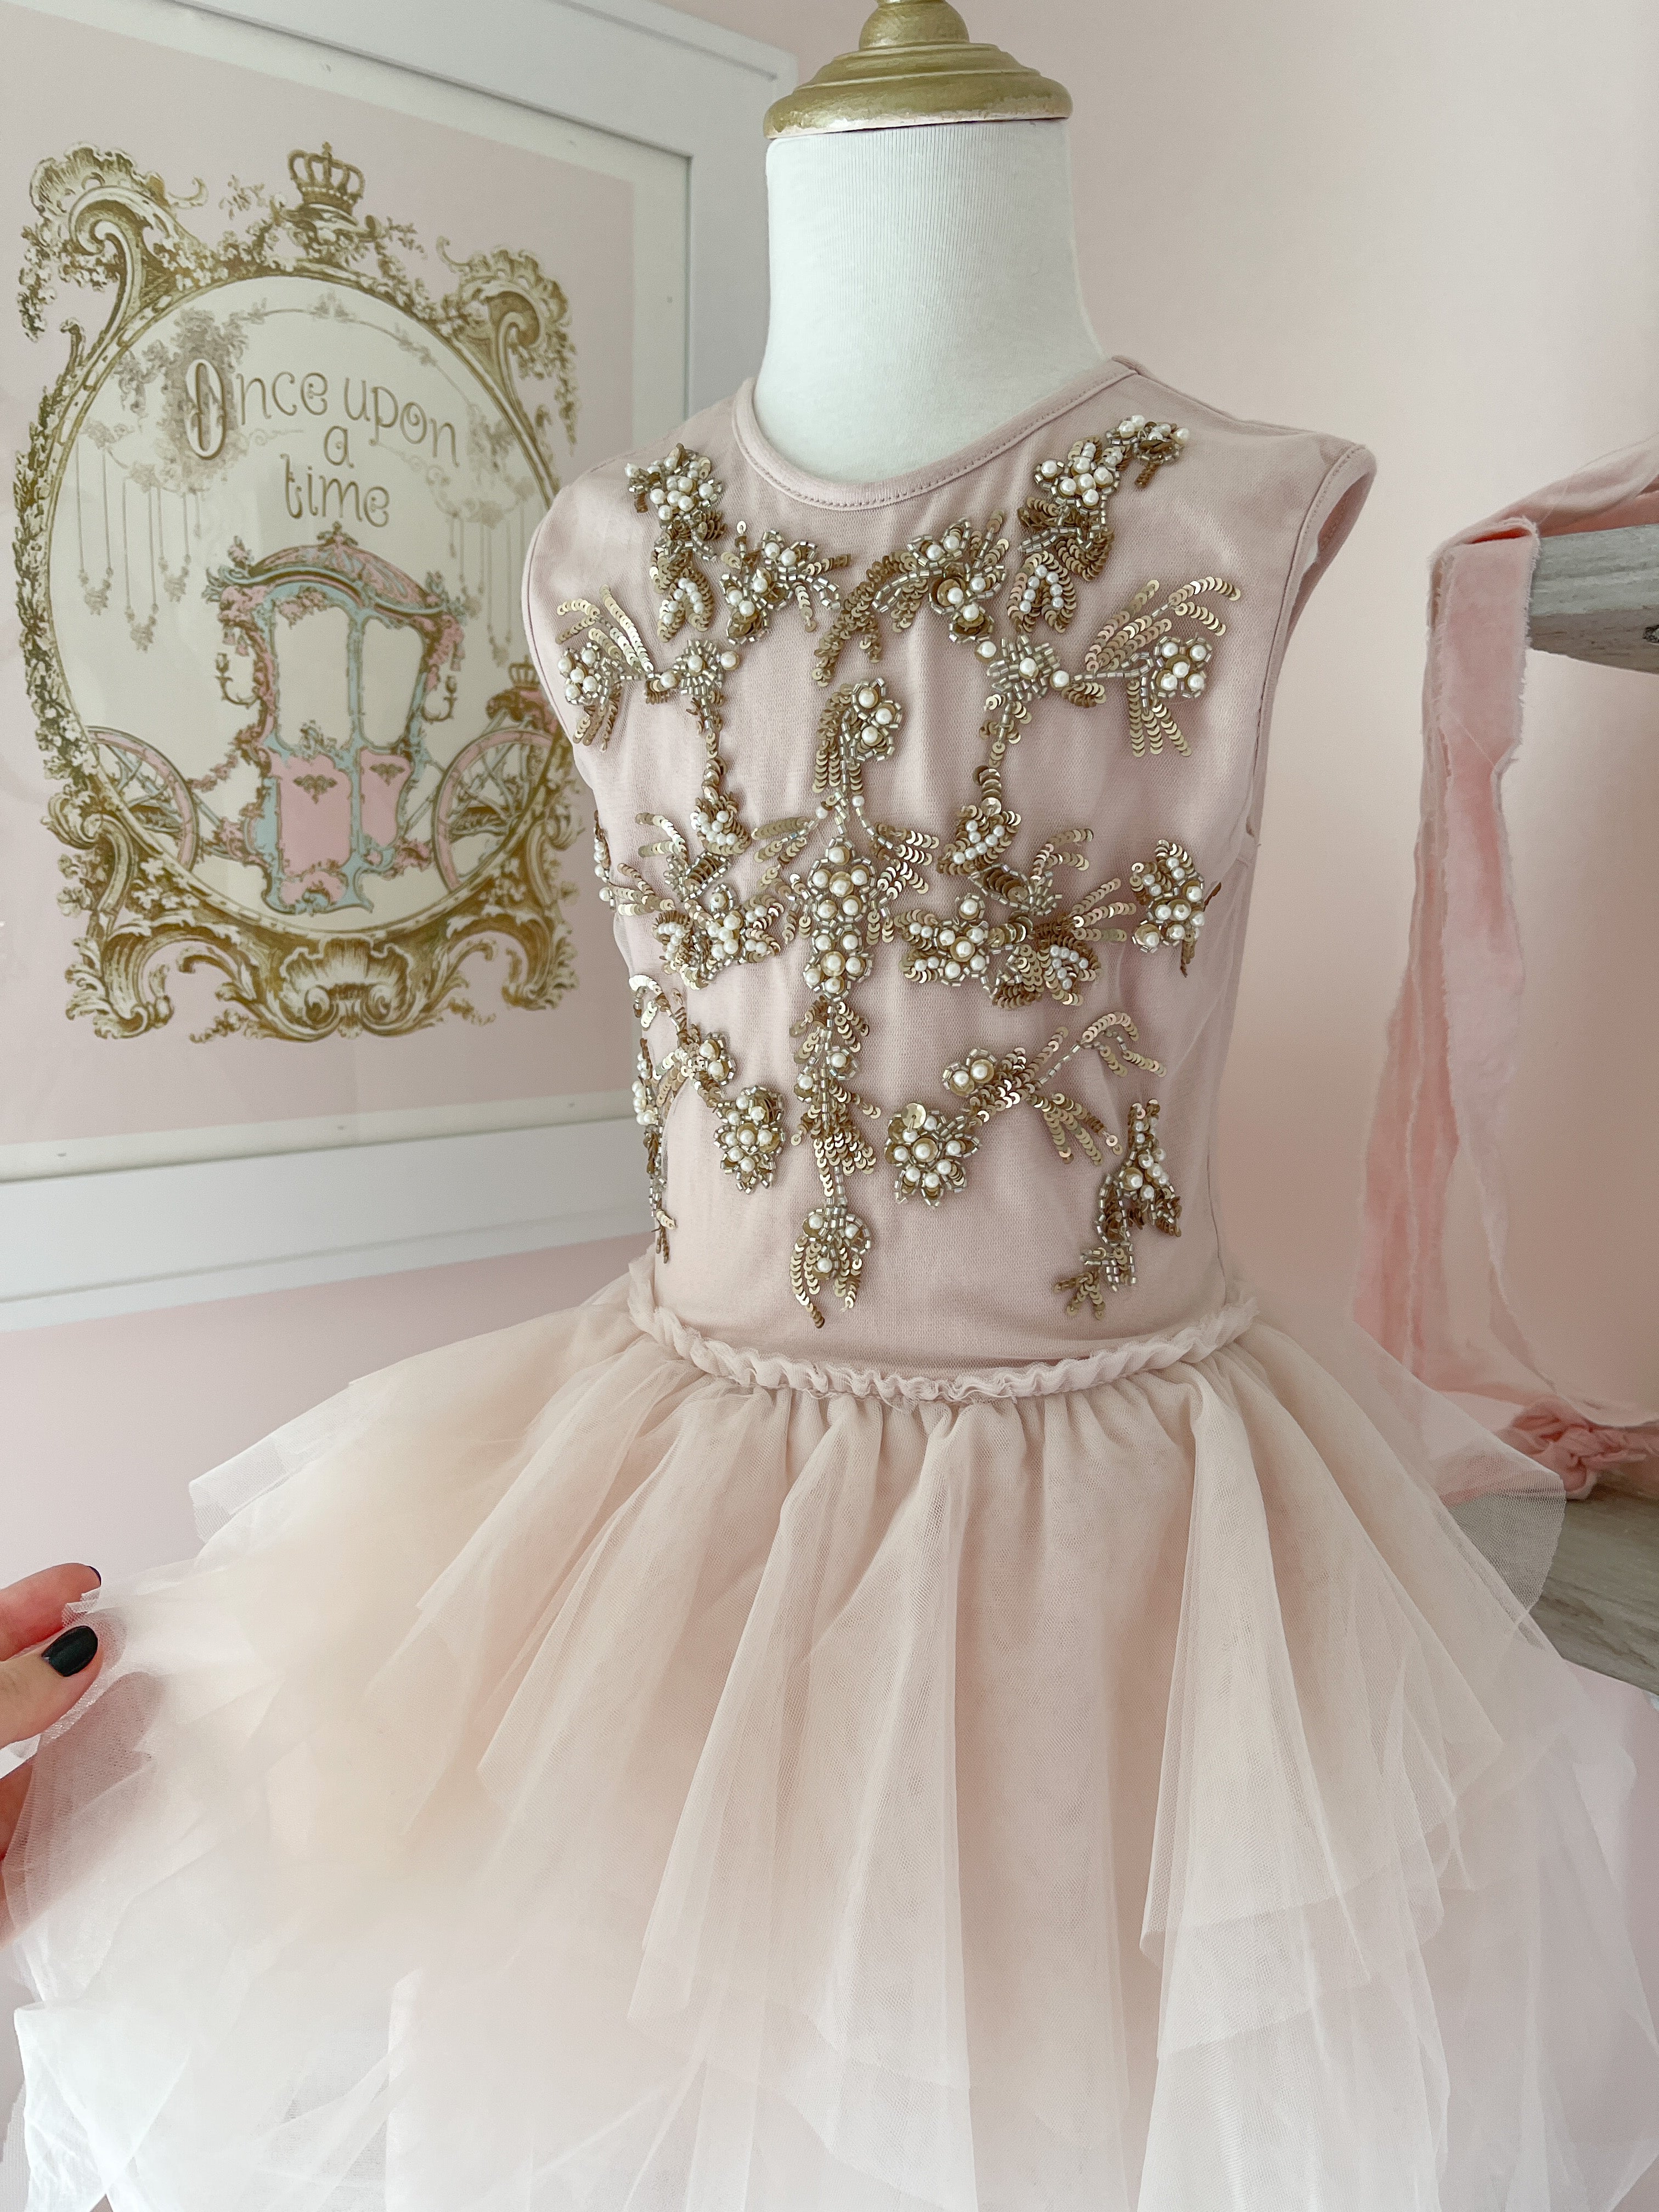 The “Clara” Blush Pink Tutu Dress